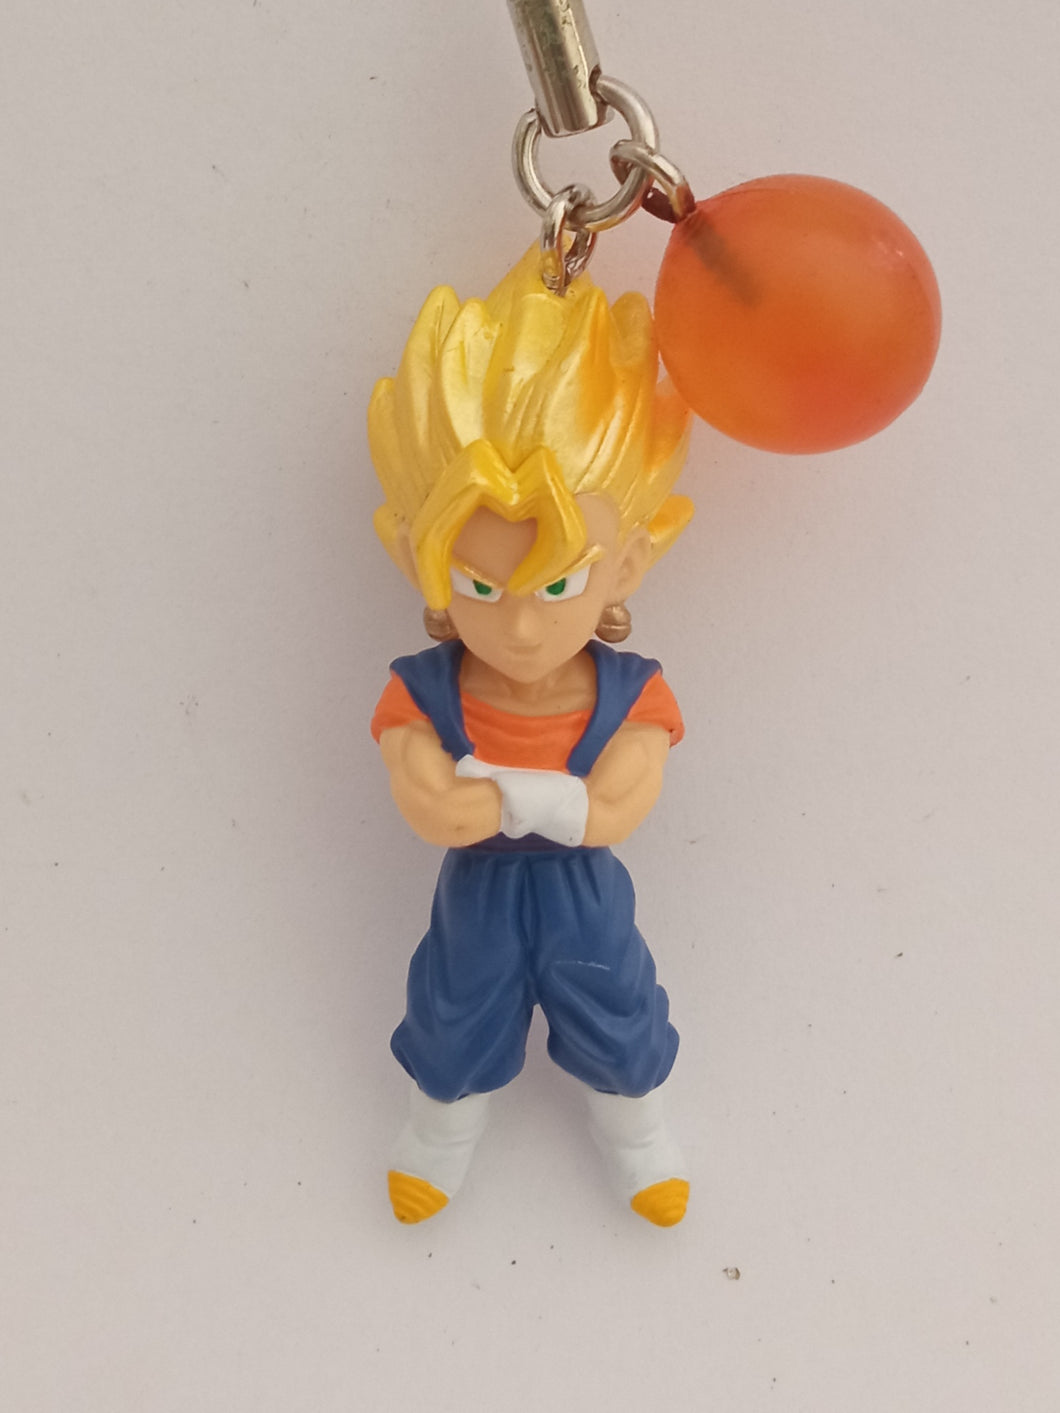 Dragon Ball Z SON GOKU DB Chara Strap Figure Keychain Mascot Key Holder 2006